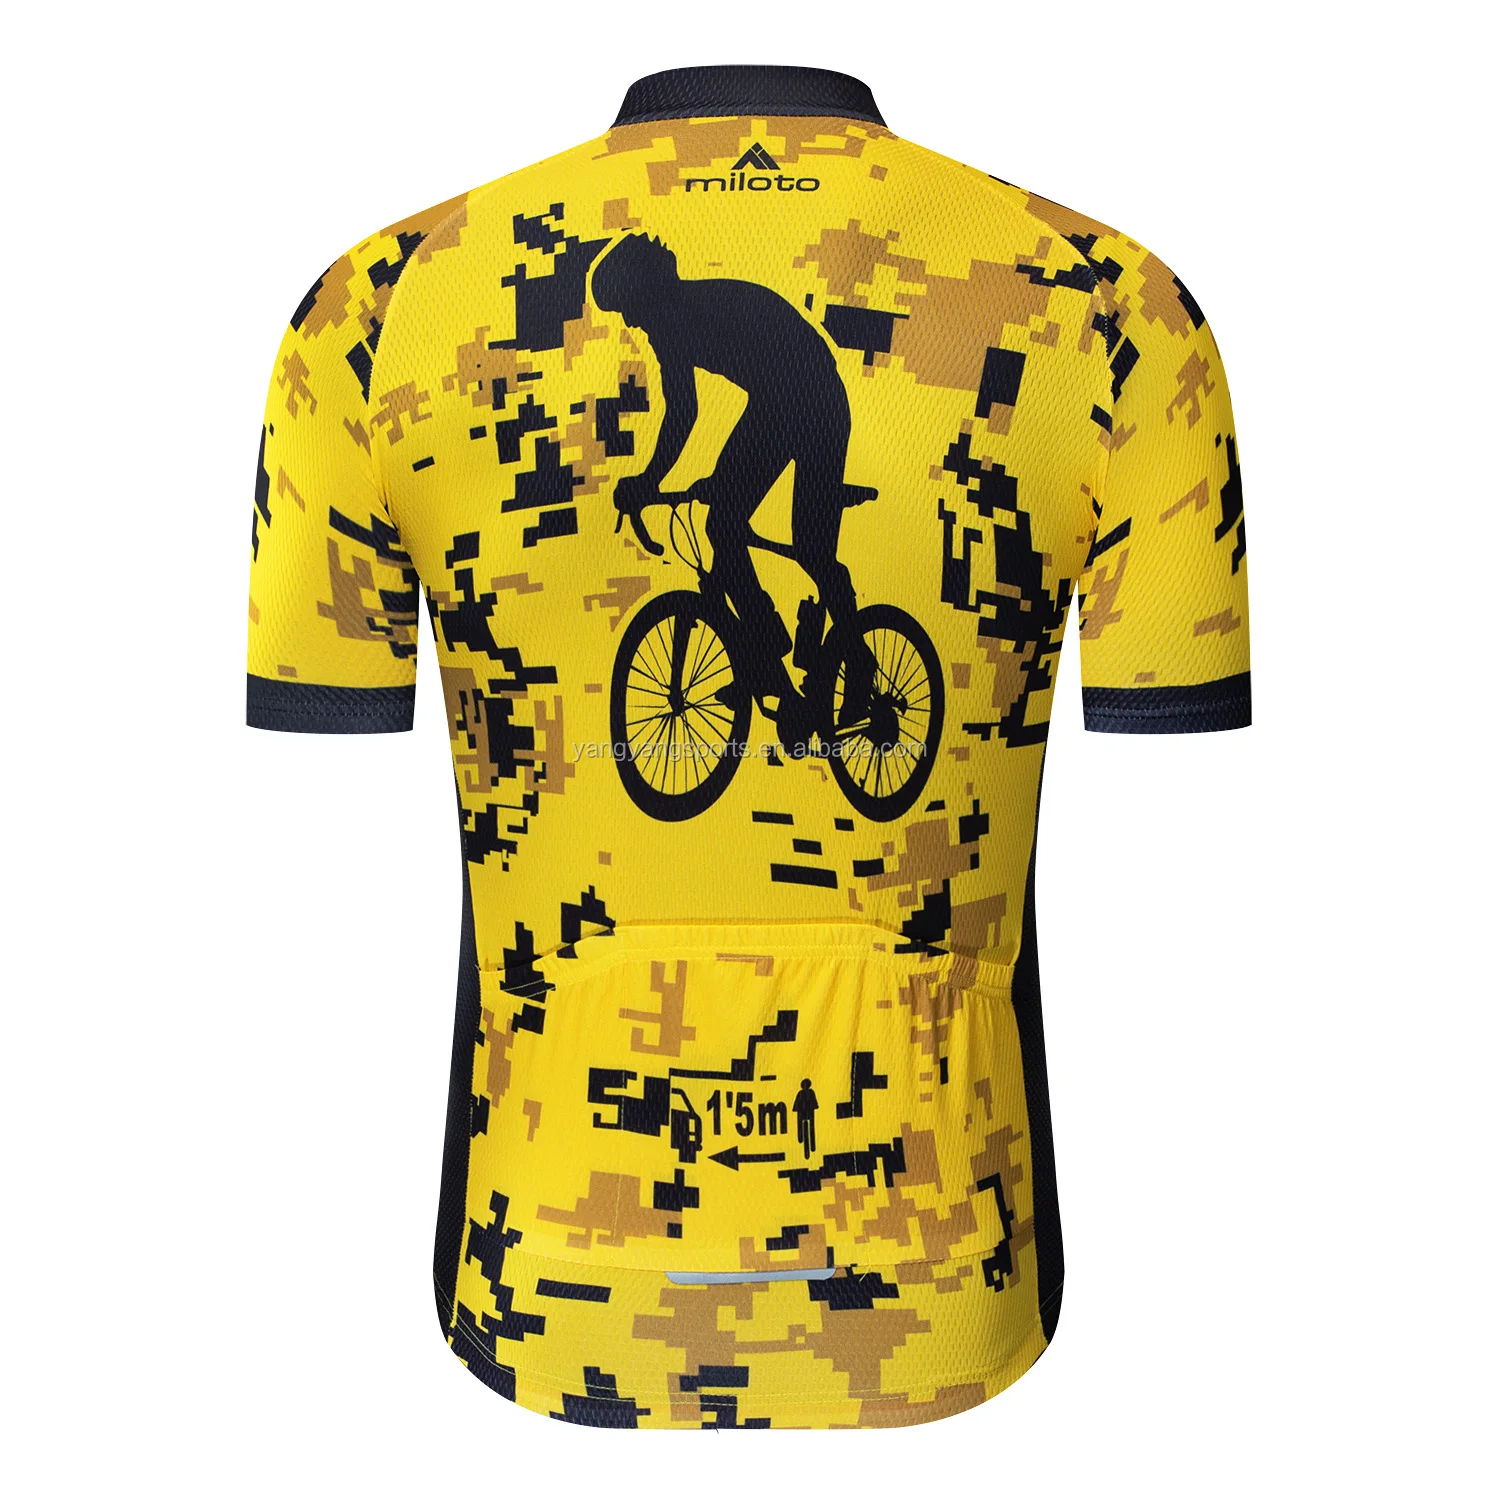 Aogda Cycling Clothing Team Bike Jersey Women Biking Shirts Tights Bicycle Jacket 39 